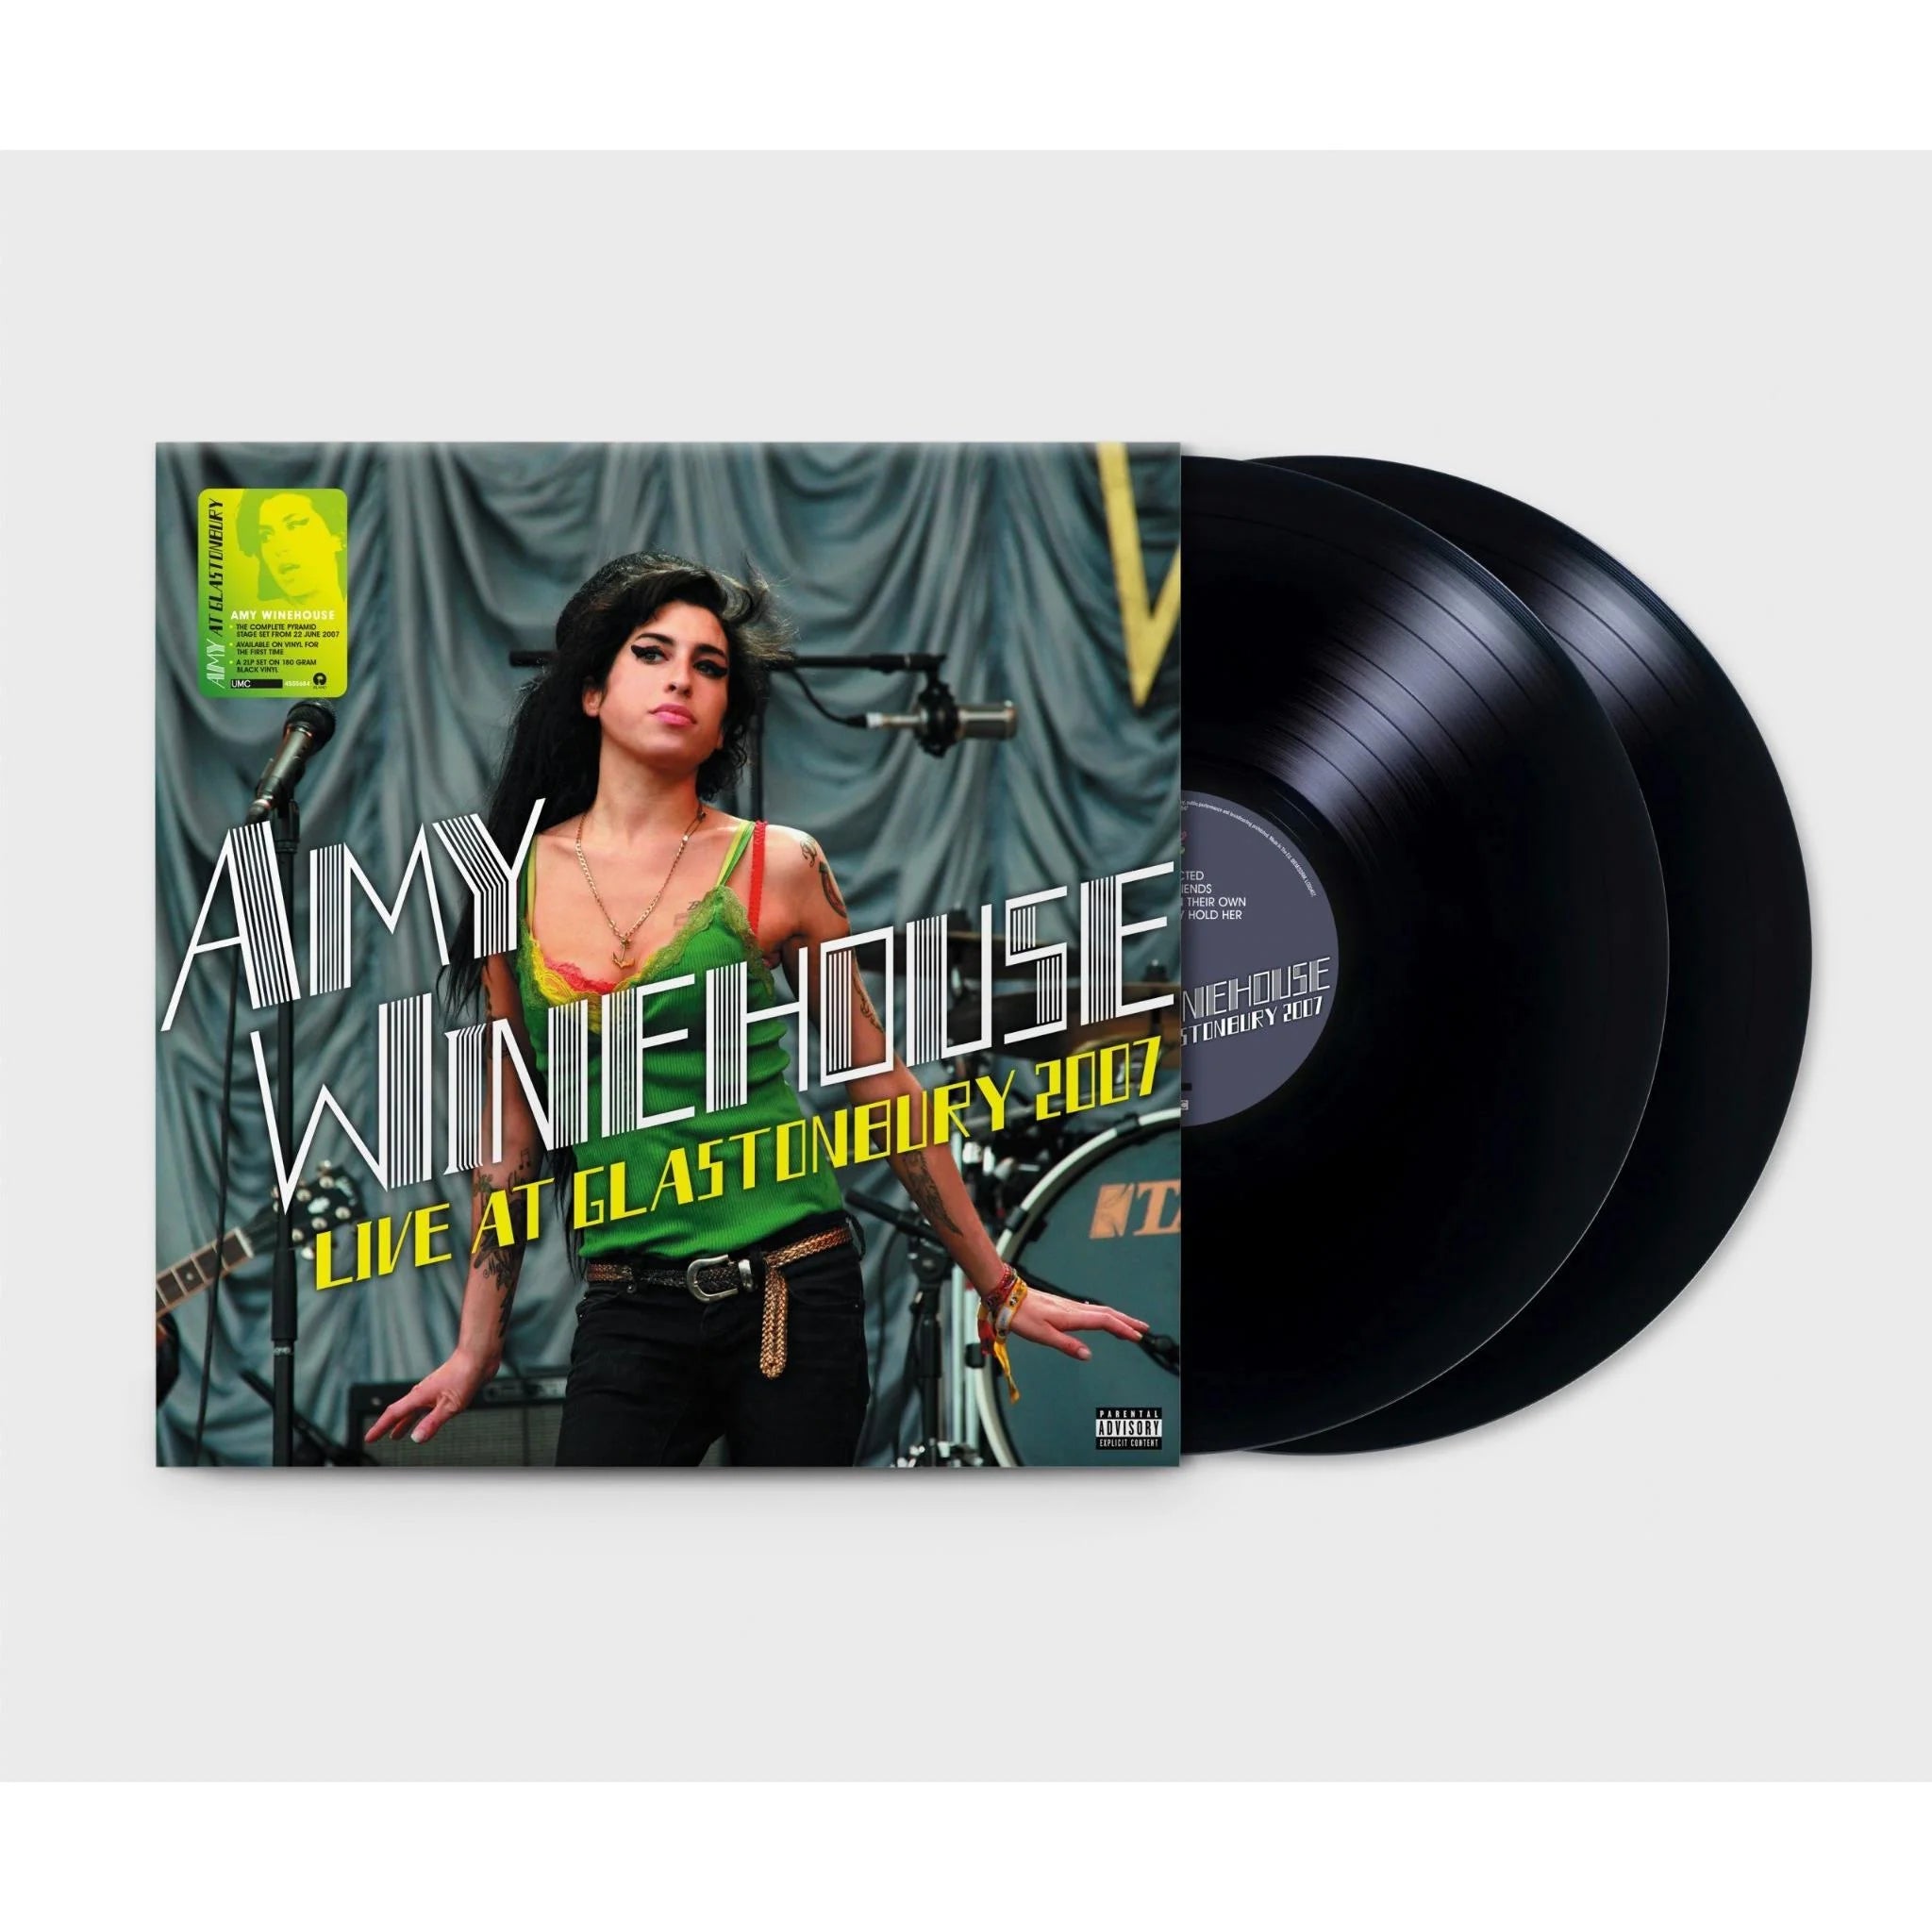 AMY WINEHOUSE - LIVE AT GLASTONBURY 2007 - VINYL LP - Wah Wah Records